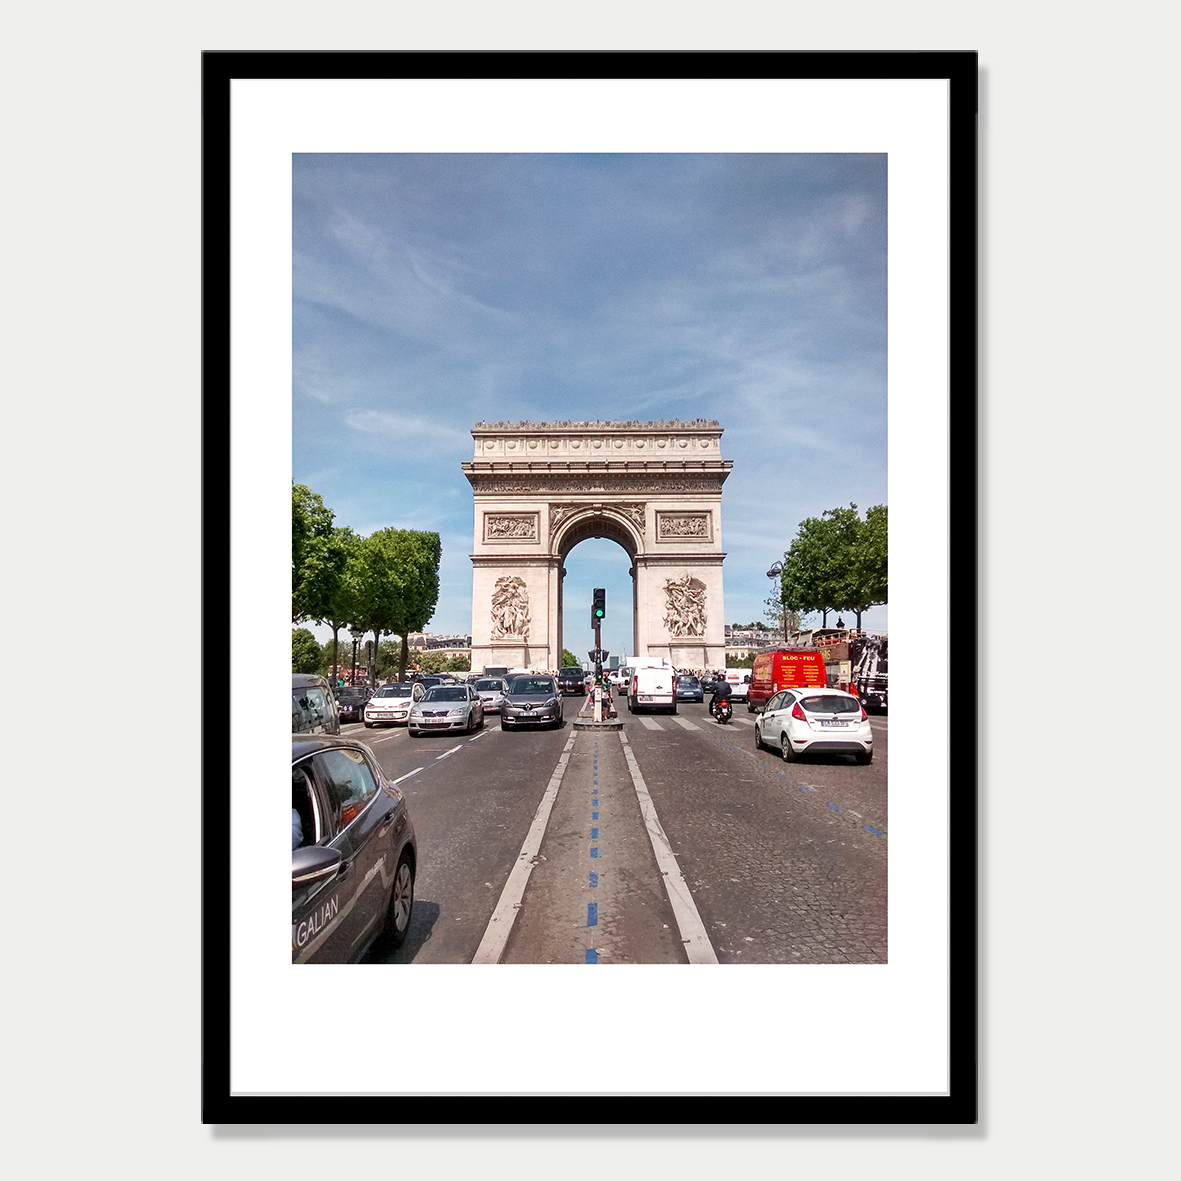 Green Light Arch De Triomphe Paris Still Life Photographic Art Print in a Skinny Black Frame